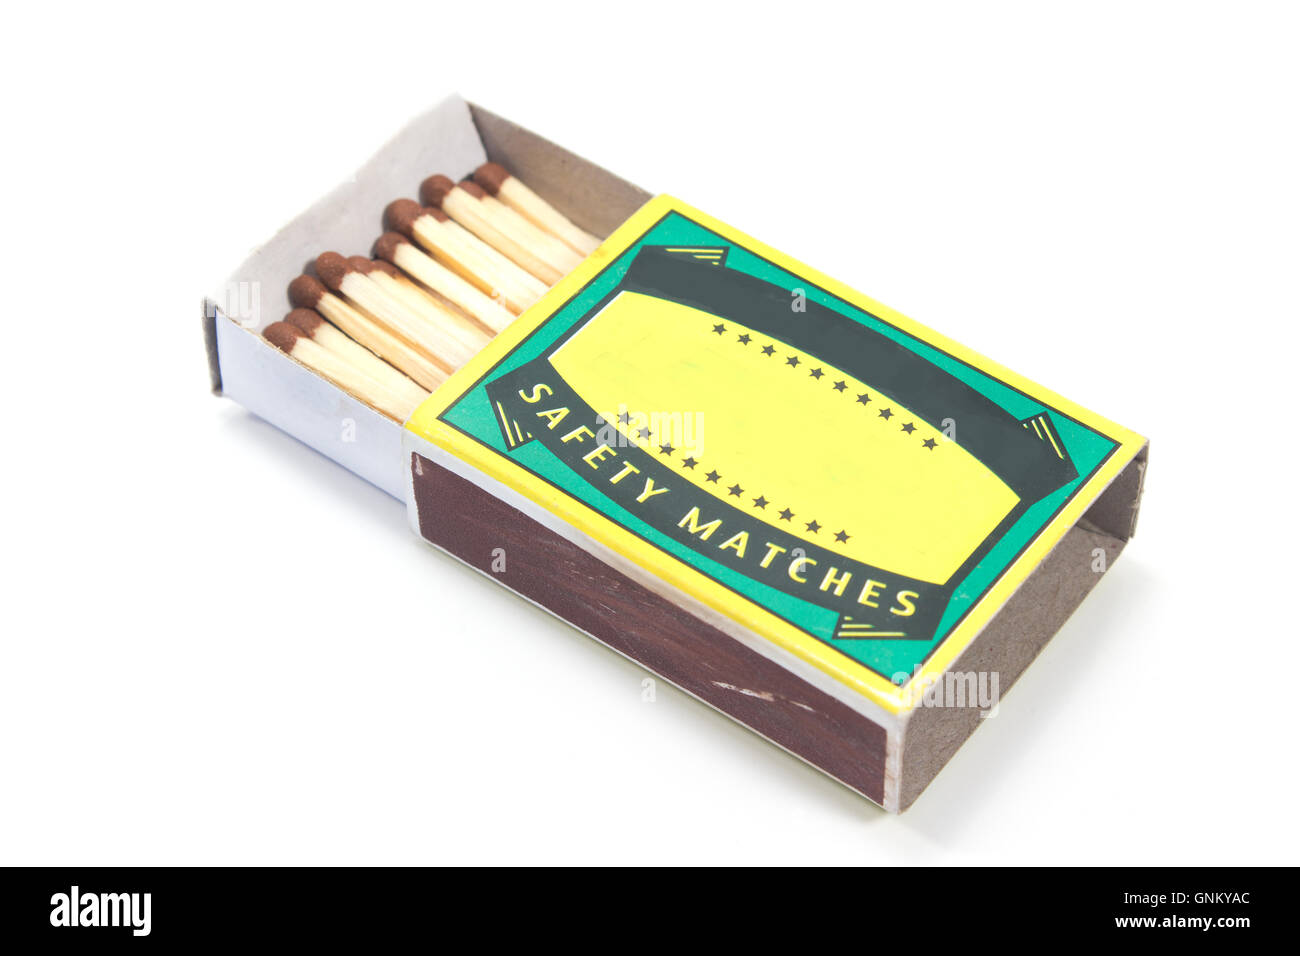 Matches box isolated on white Stock Photo